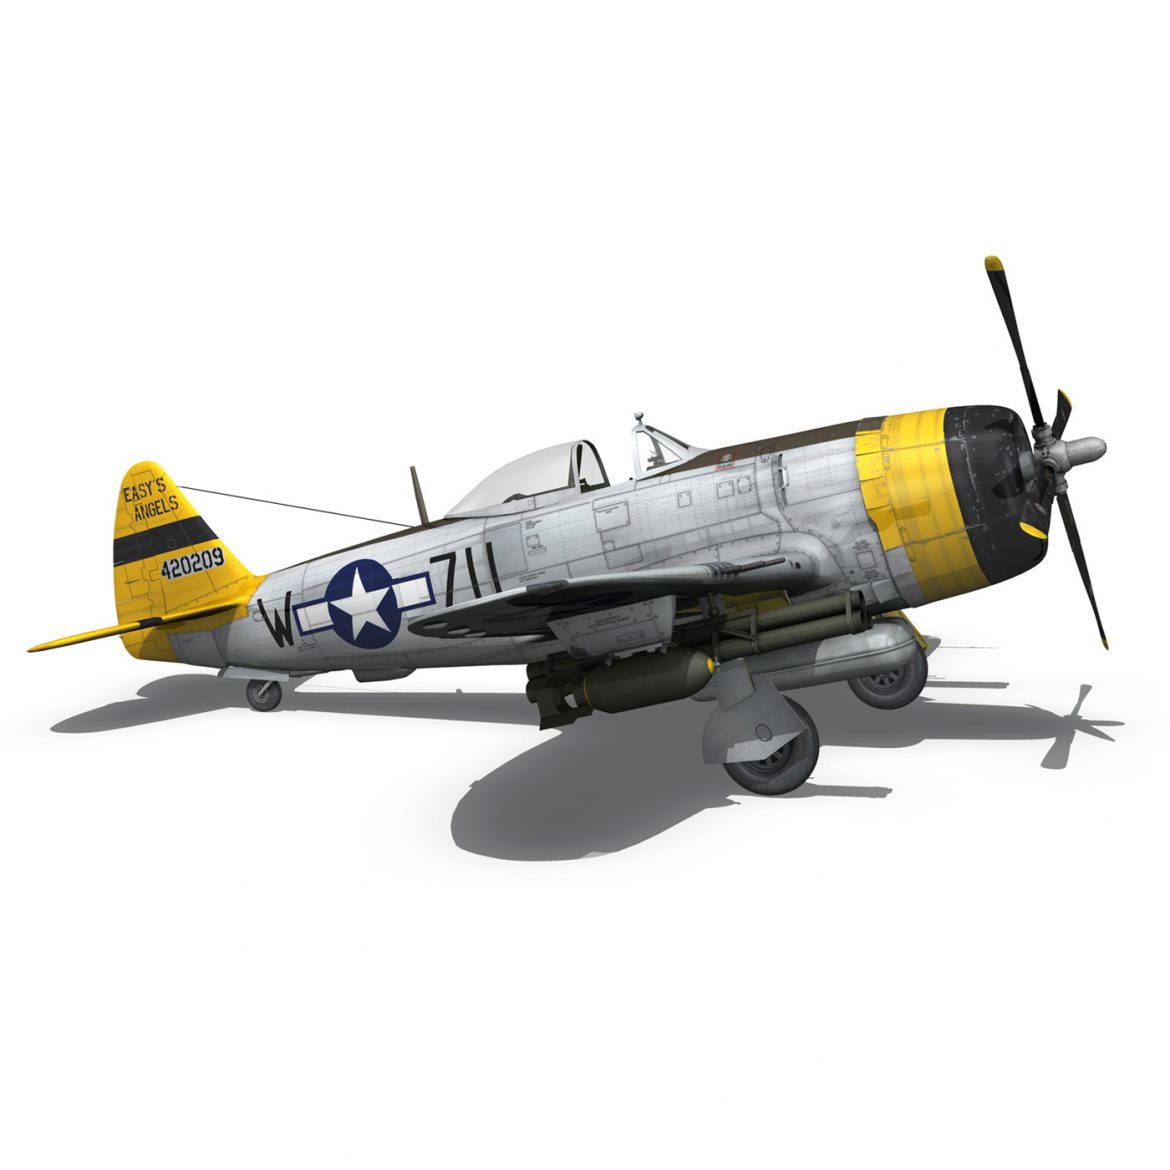 republic p-47d thunderbolt – eileen 3d model 3ds fbx c4d lwo obj 299946